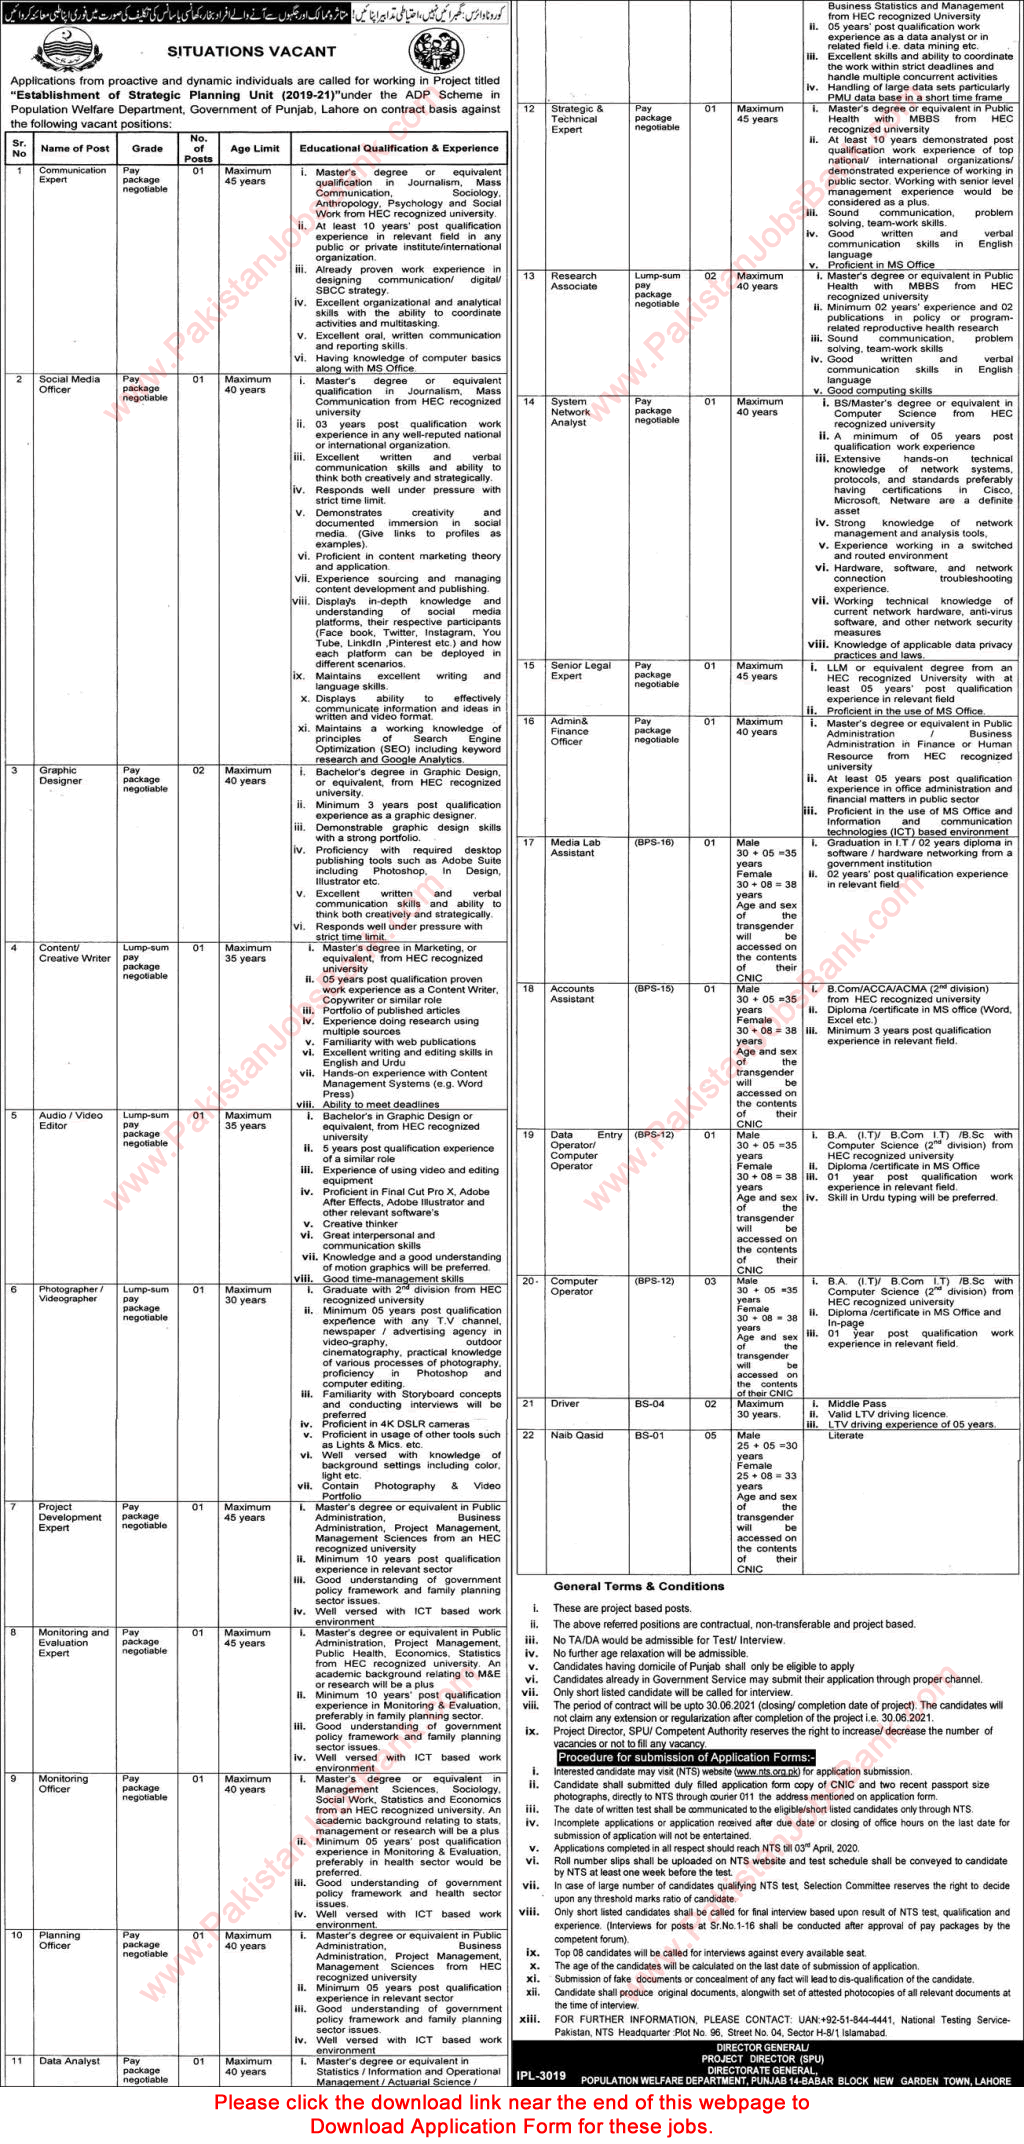 Population Welfare Department Punjab Jobs 2020 March NTS Application Form Naib Qasid, Computer Operators & Others Latest